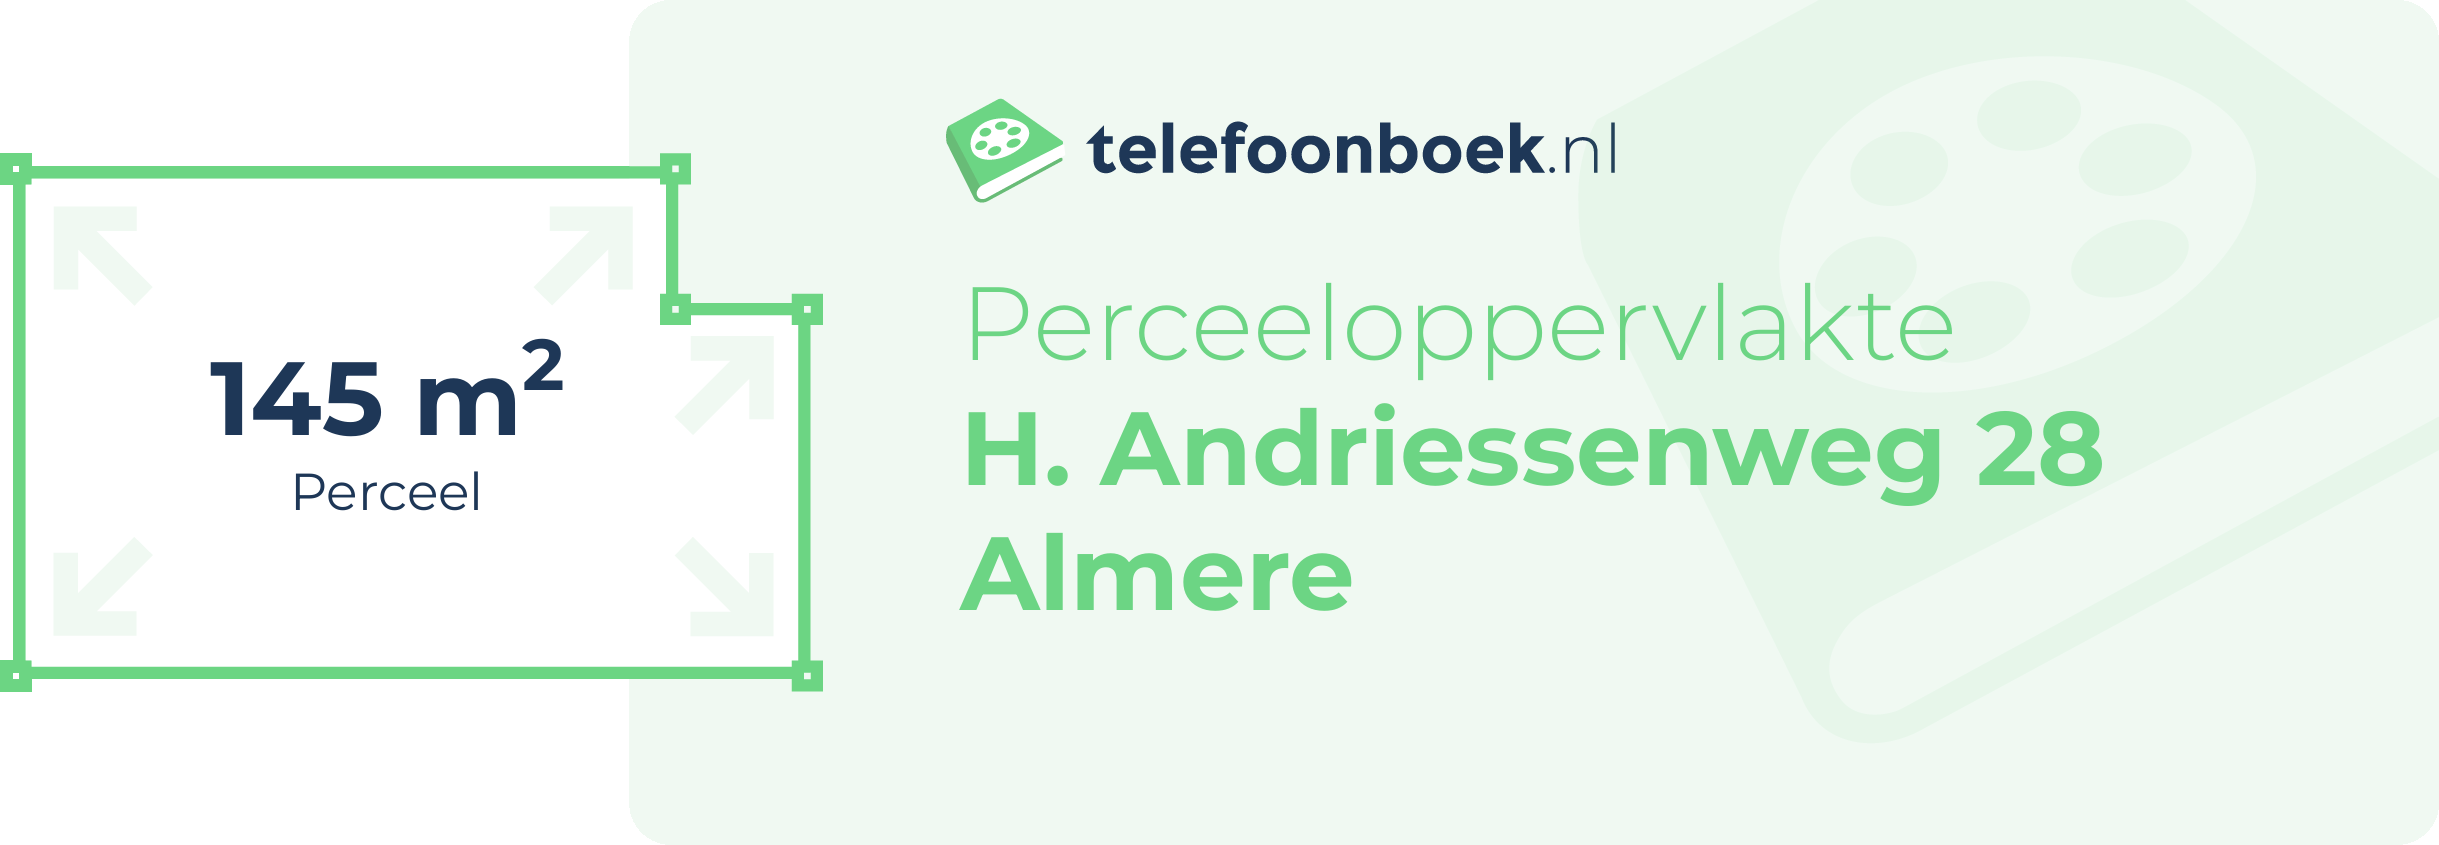 Perceeloppervlakte H. Andriessenweg 28 Almere